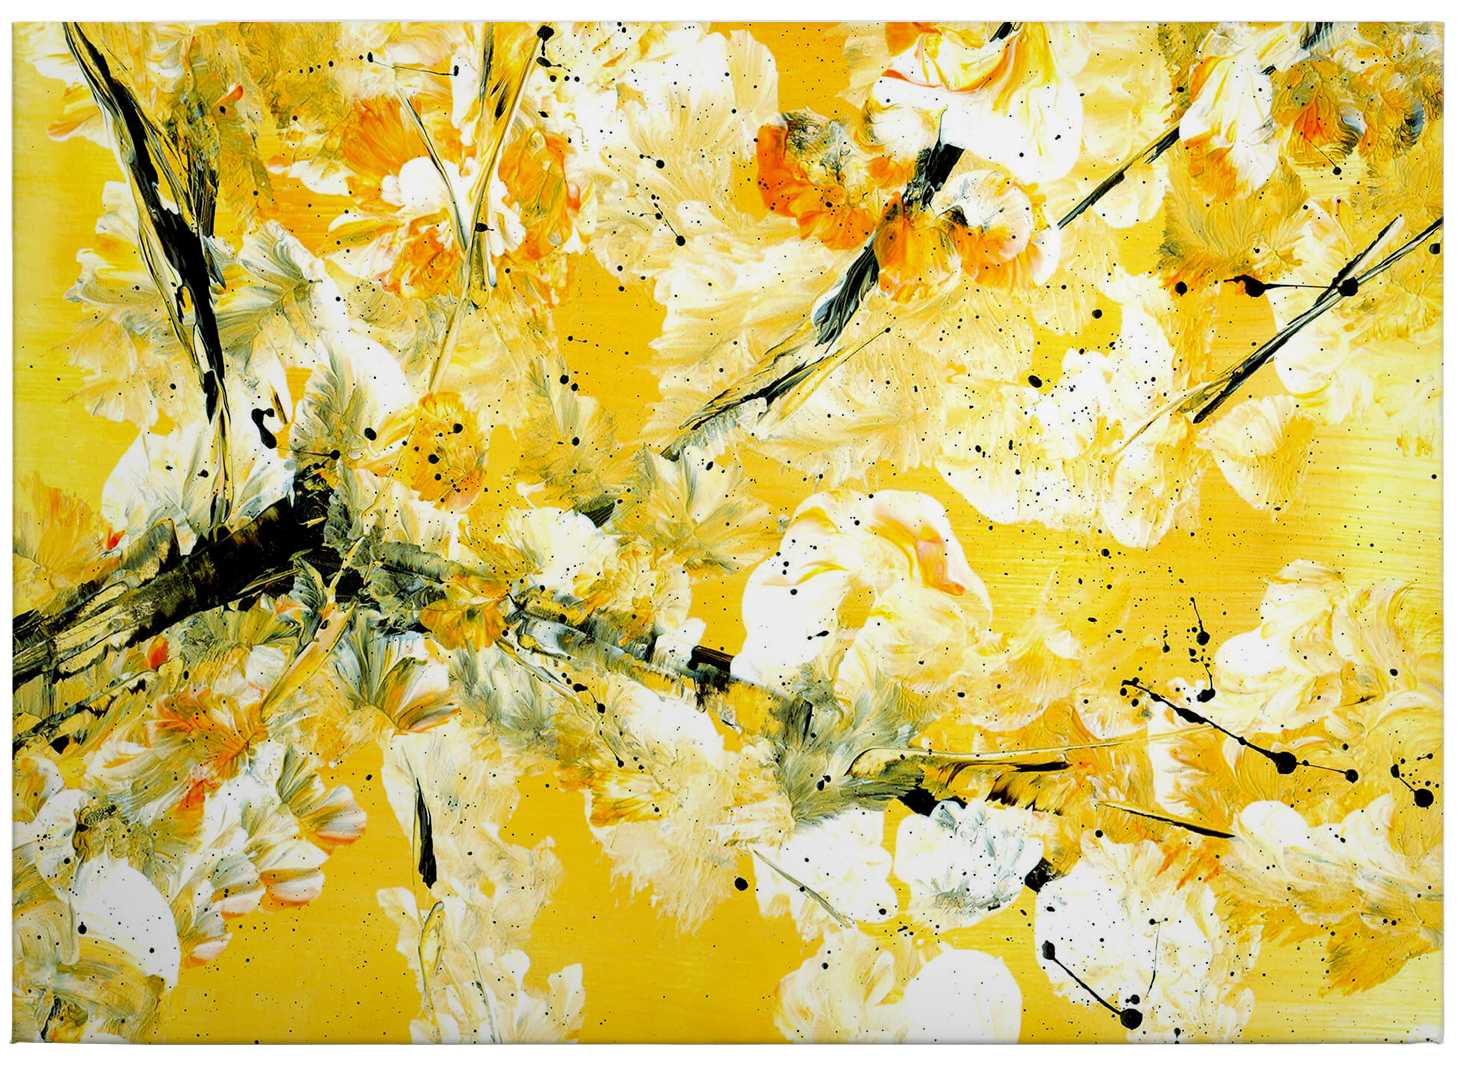             Niksic Lienzo pintura abstracta - 0,70 m x 0,50 m
        